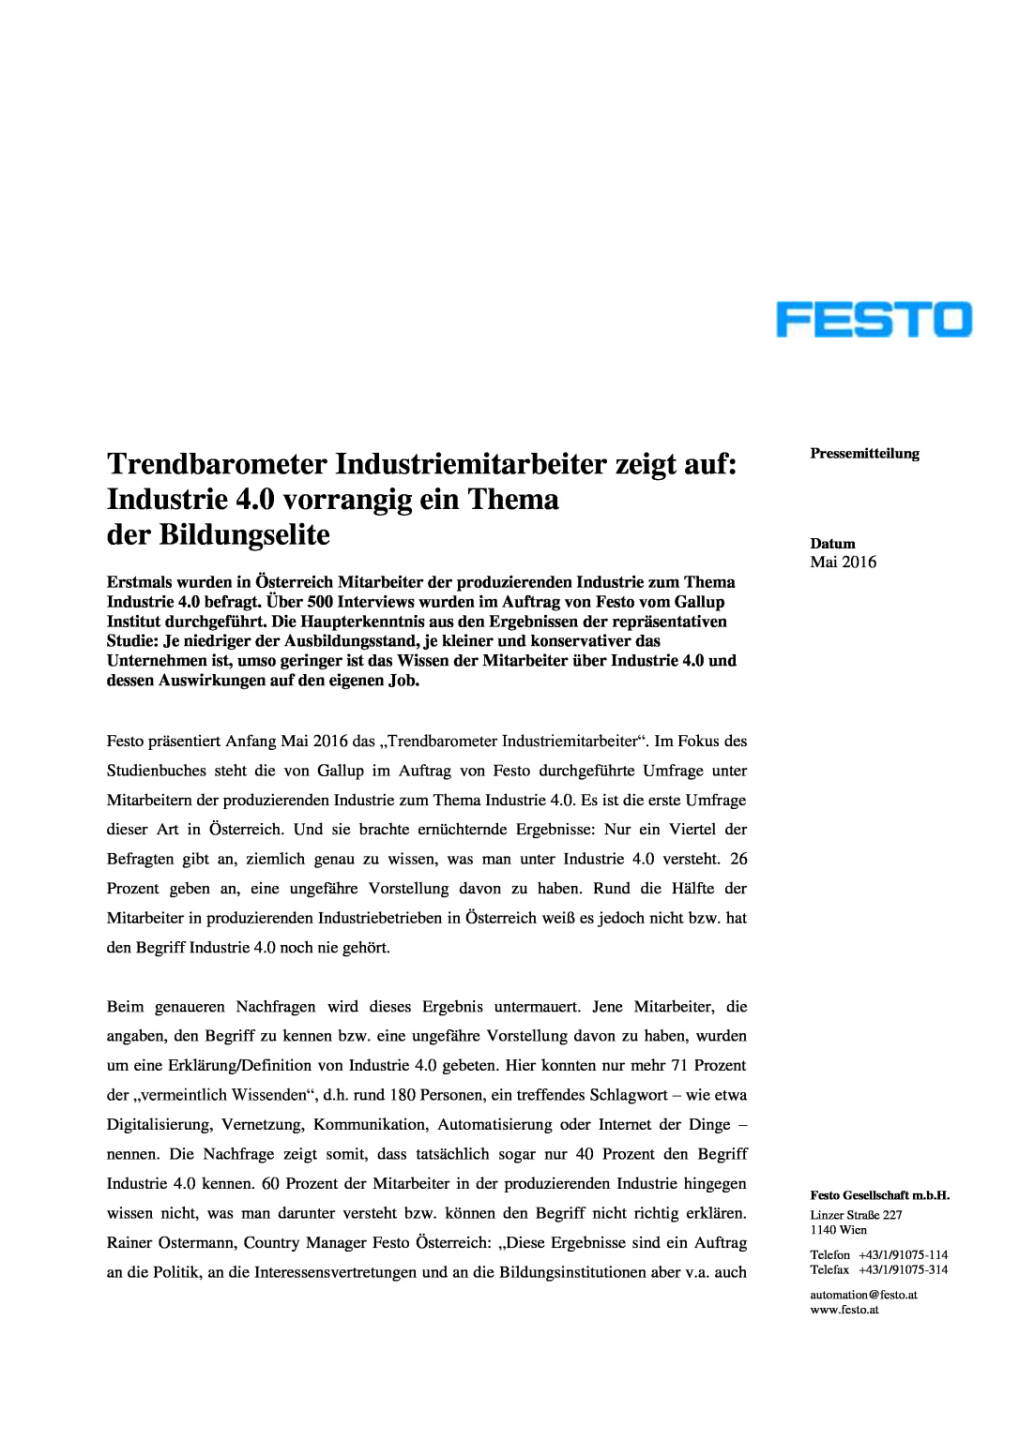 Festo: Trendbarometer Industriemitarbeiter, Seite 1/3, komplettes Dokument unter http://boerse-social.com/static/uploads/file_1011_festo_trendbarometer_industriemitarbeiter.pdf